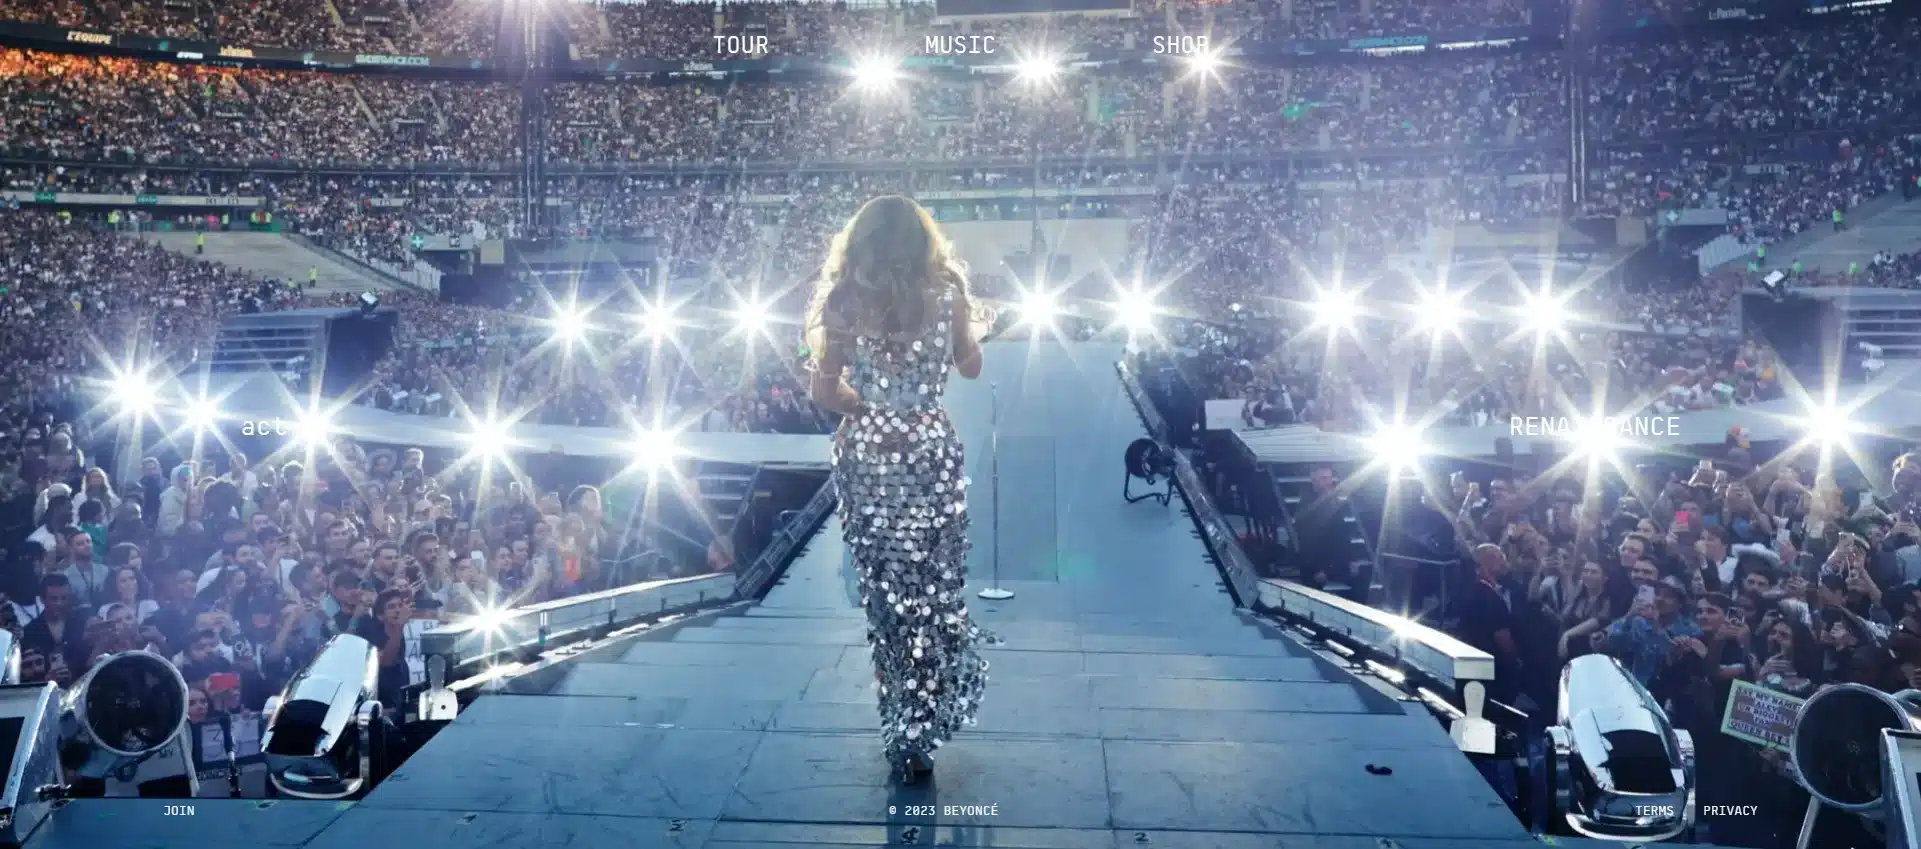 Beyoncé website image